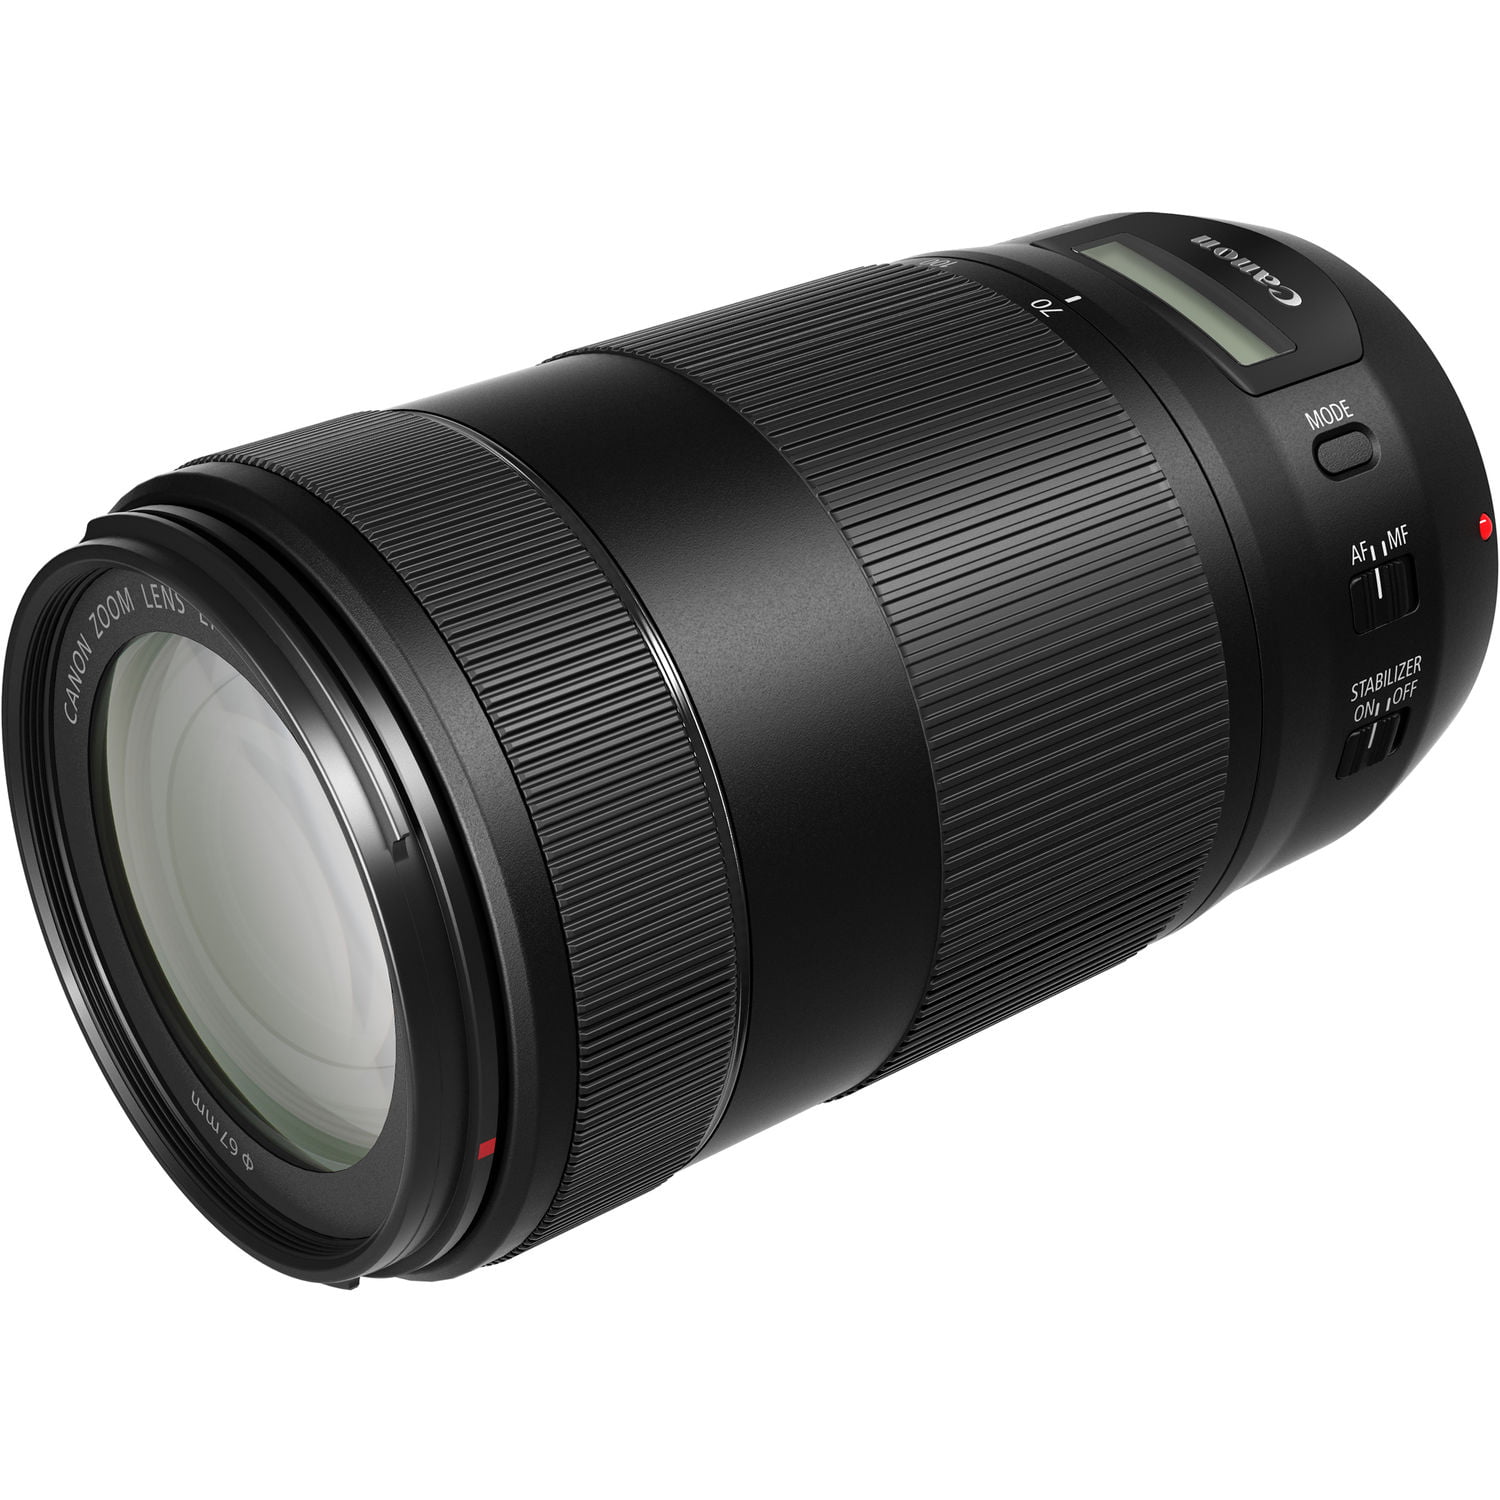 Canon EF 70-300mm f/4-5.6 IS II USM Lens - Walmart.com